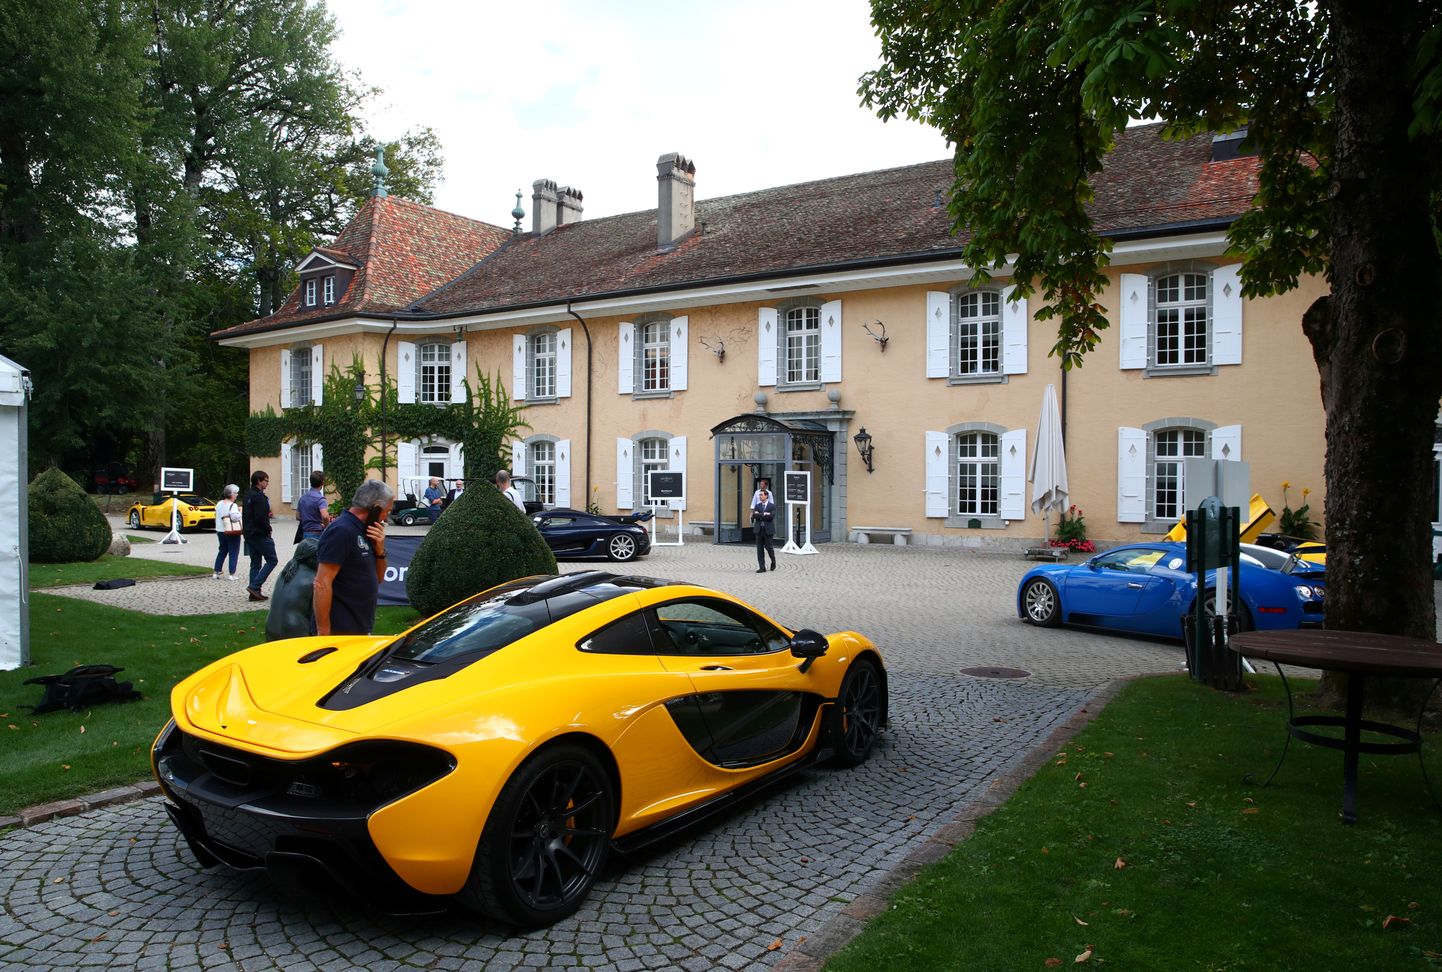 Sportauto McLaren P1 27. septembril 2019 Šveitsis Genfi lähedase Cheserex Bonmont Golf & Country Club juures. Pilt on illustreeriv